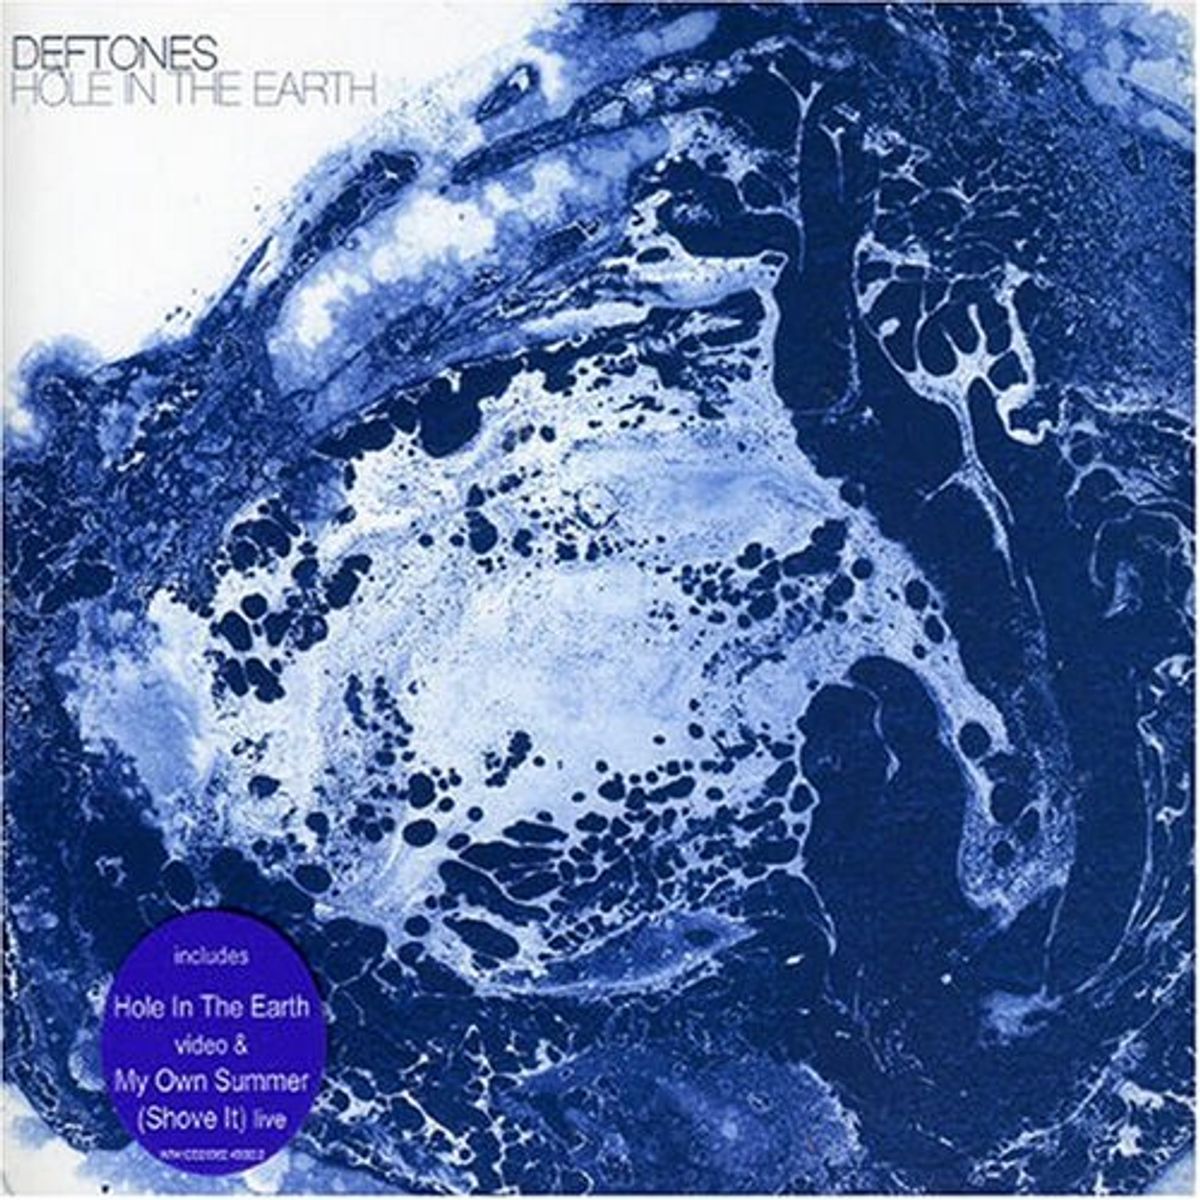 #BobEzrin - Deftones - Hole In The Earth(2006)